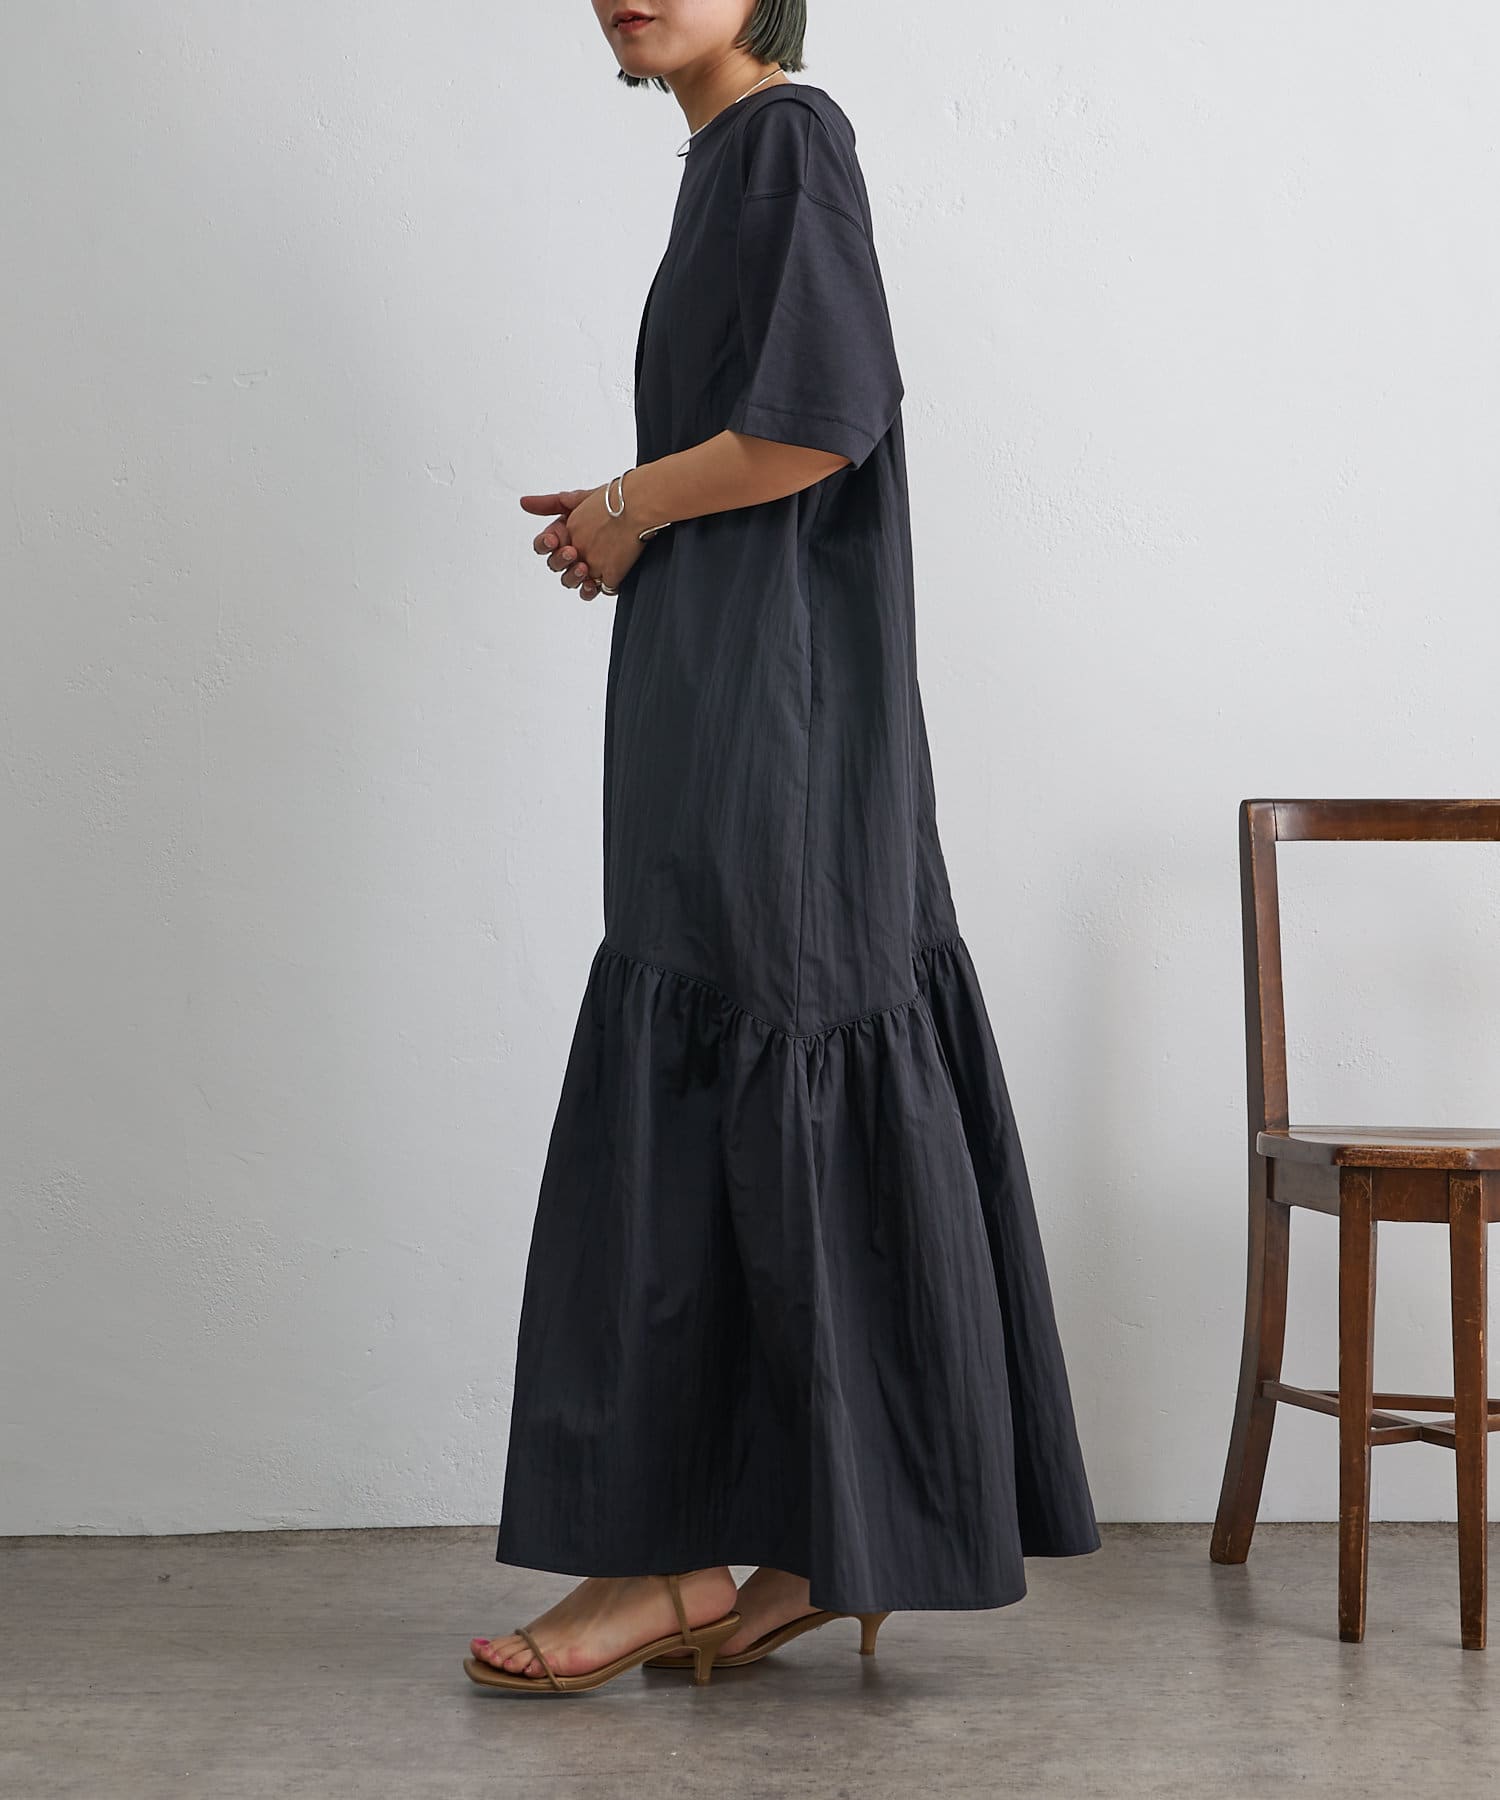 Omekashi(オメカシ) タフタギャザージャンパースカート